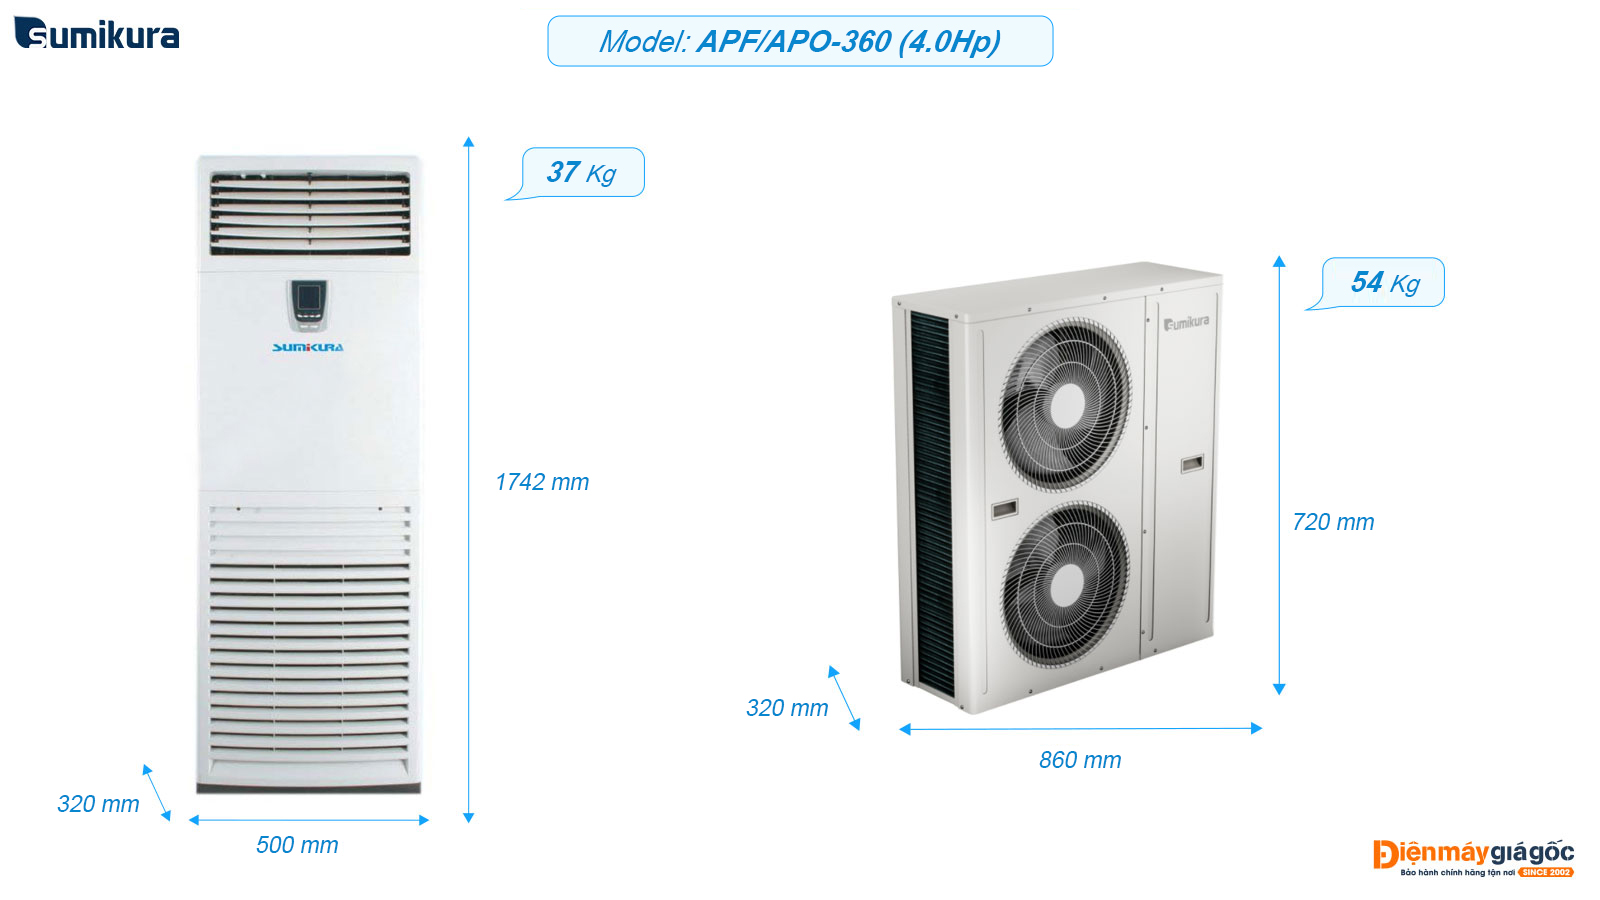 Sumikura Floor standing air conditioning APF/APO-360 (4.0Hp) Gas R410A